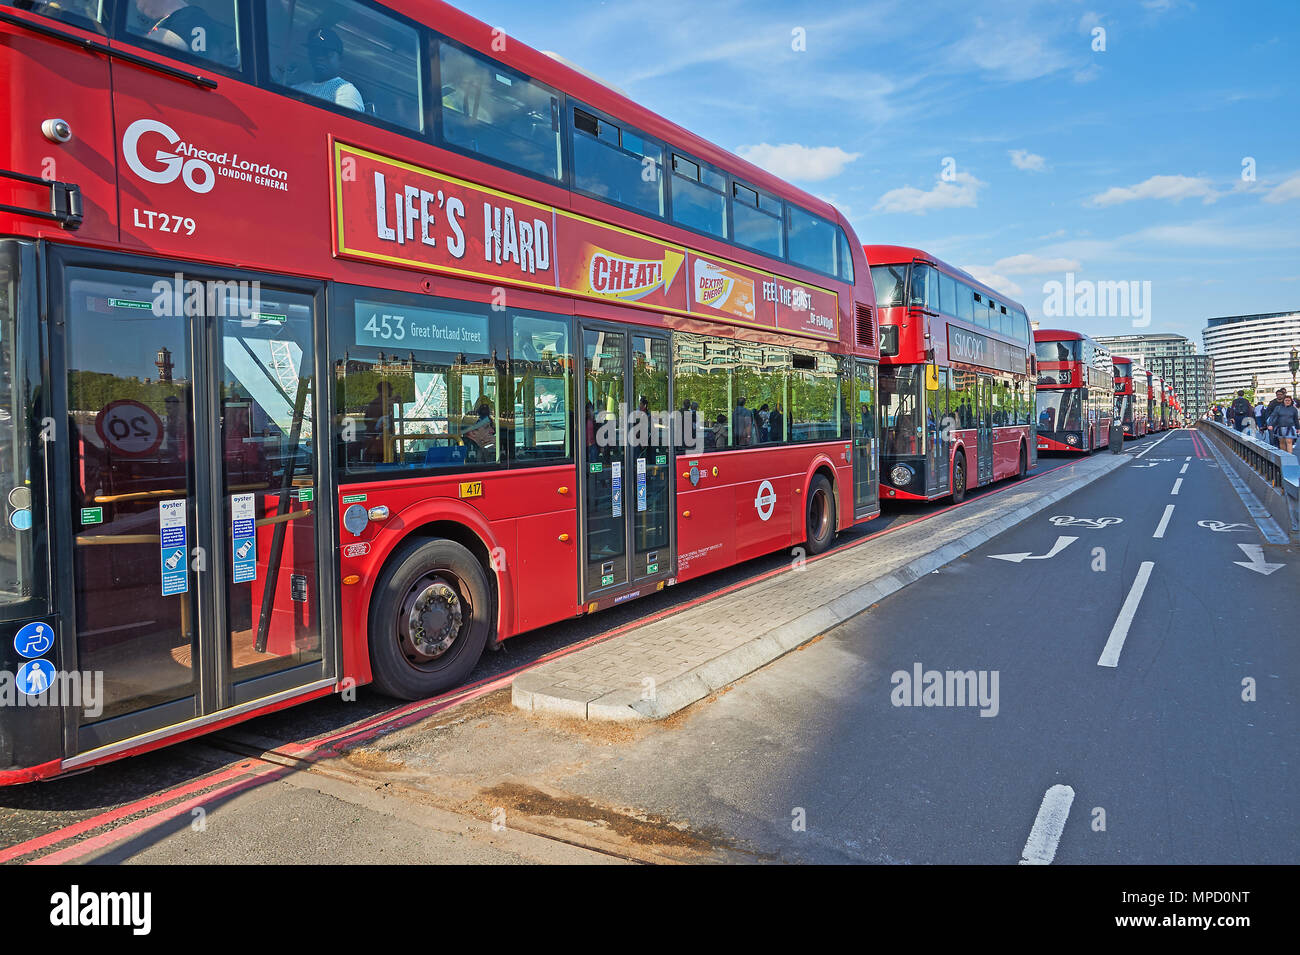 London Westminster Bridge e una linea di red double decker bus Foto Stock